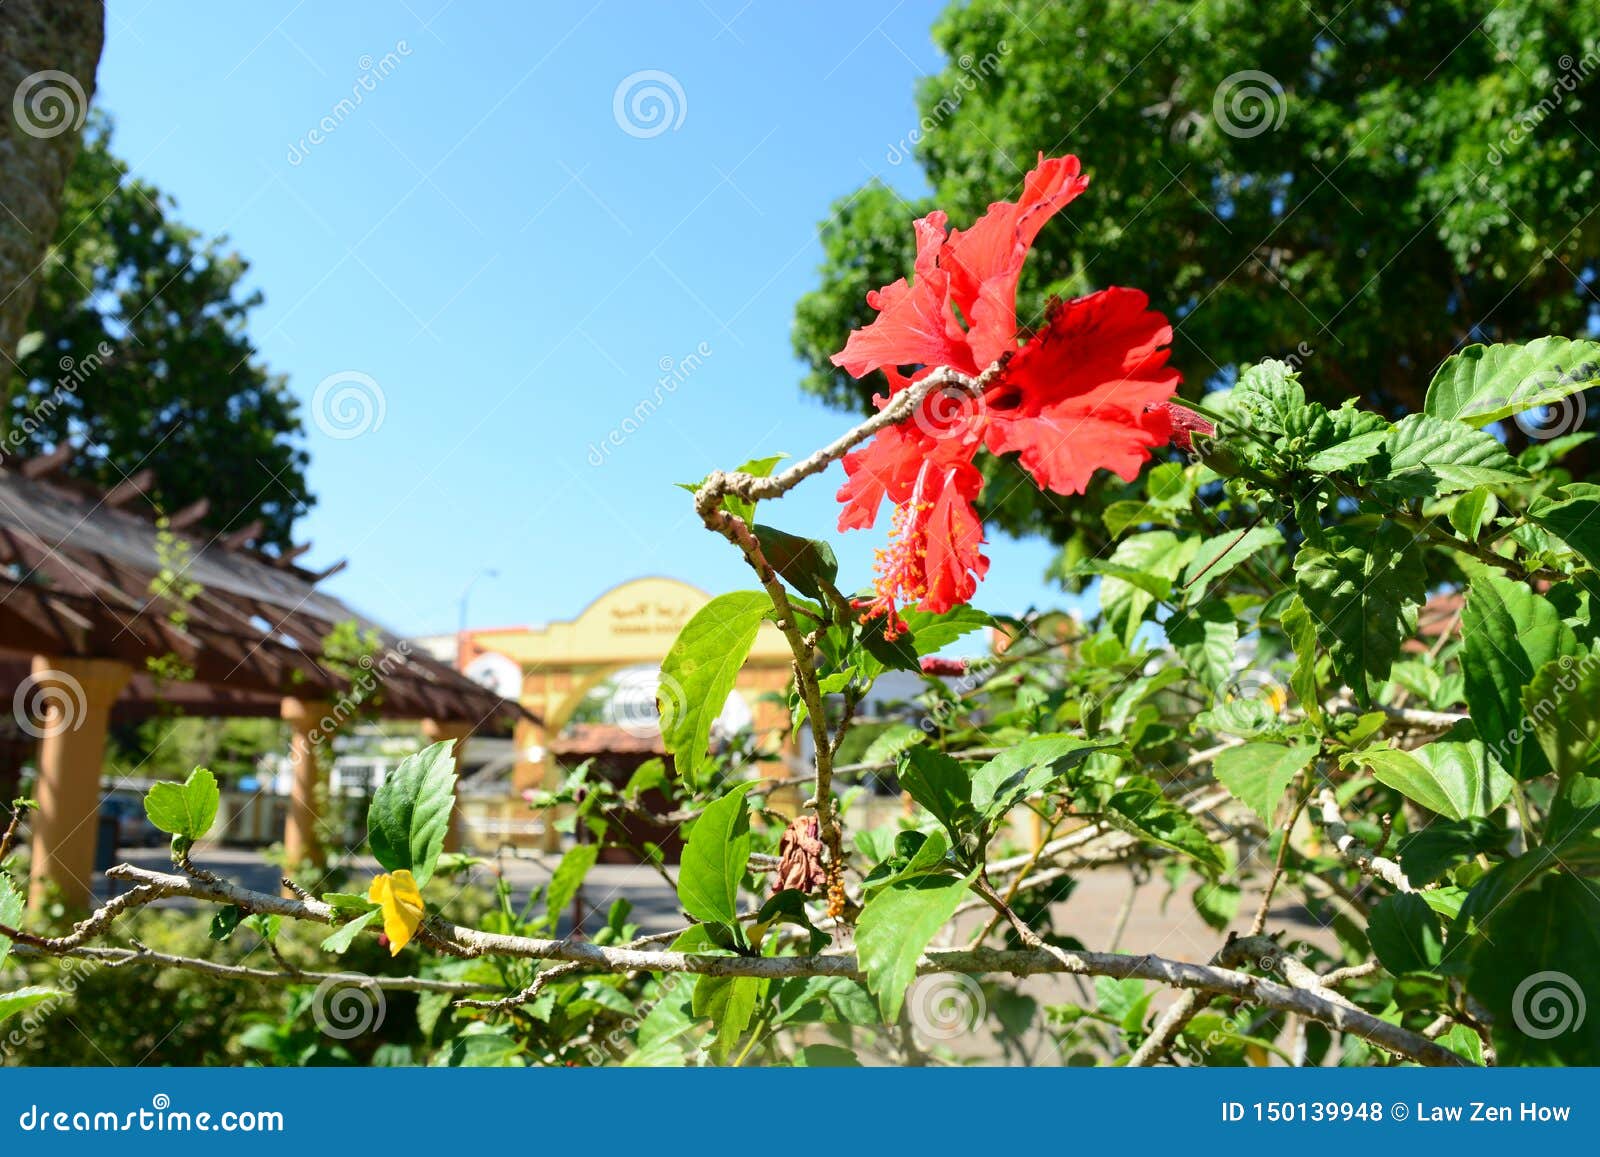 bunga raya flower in park